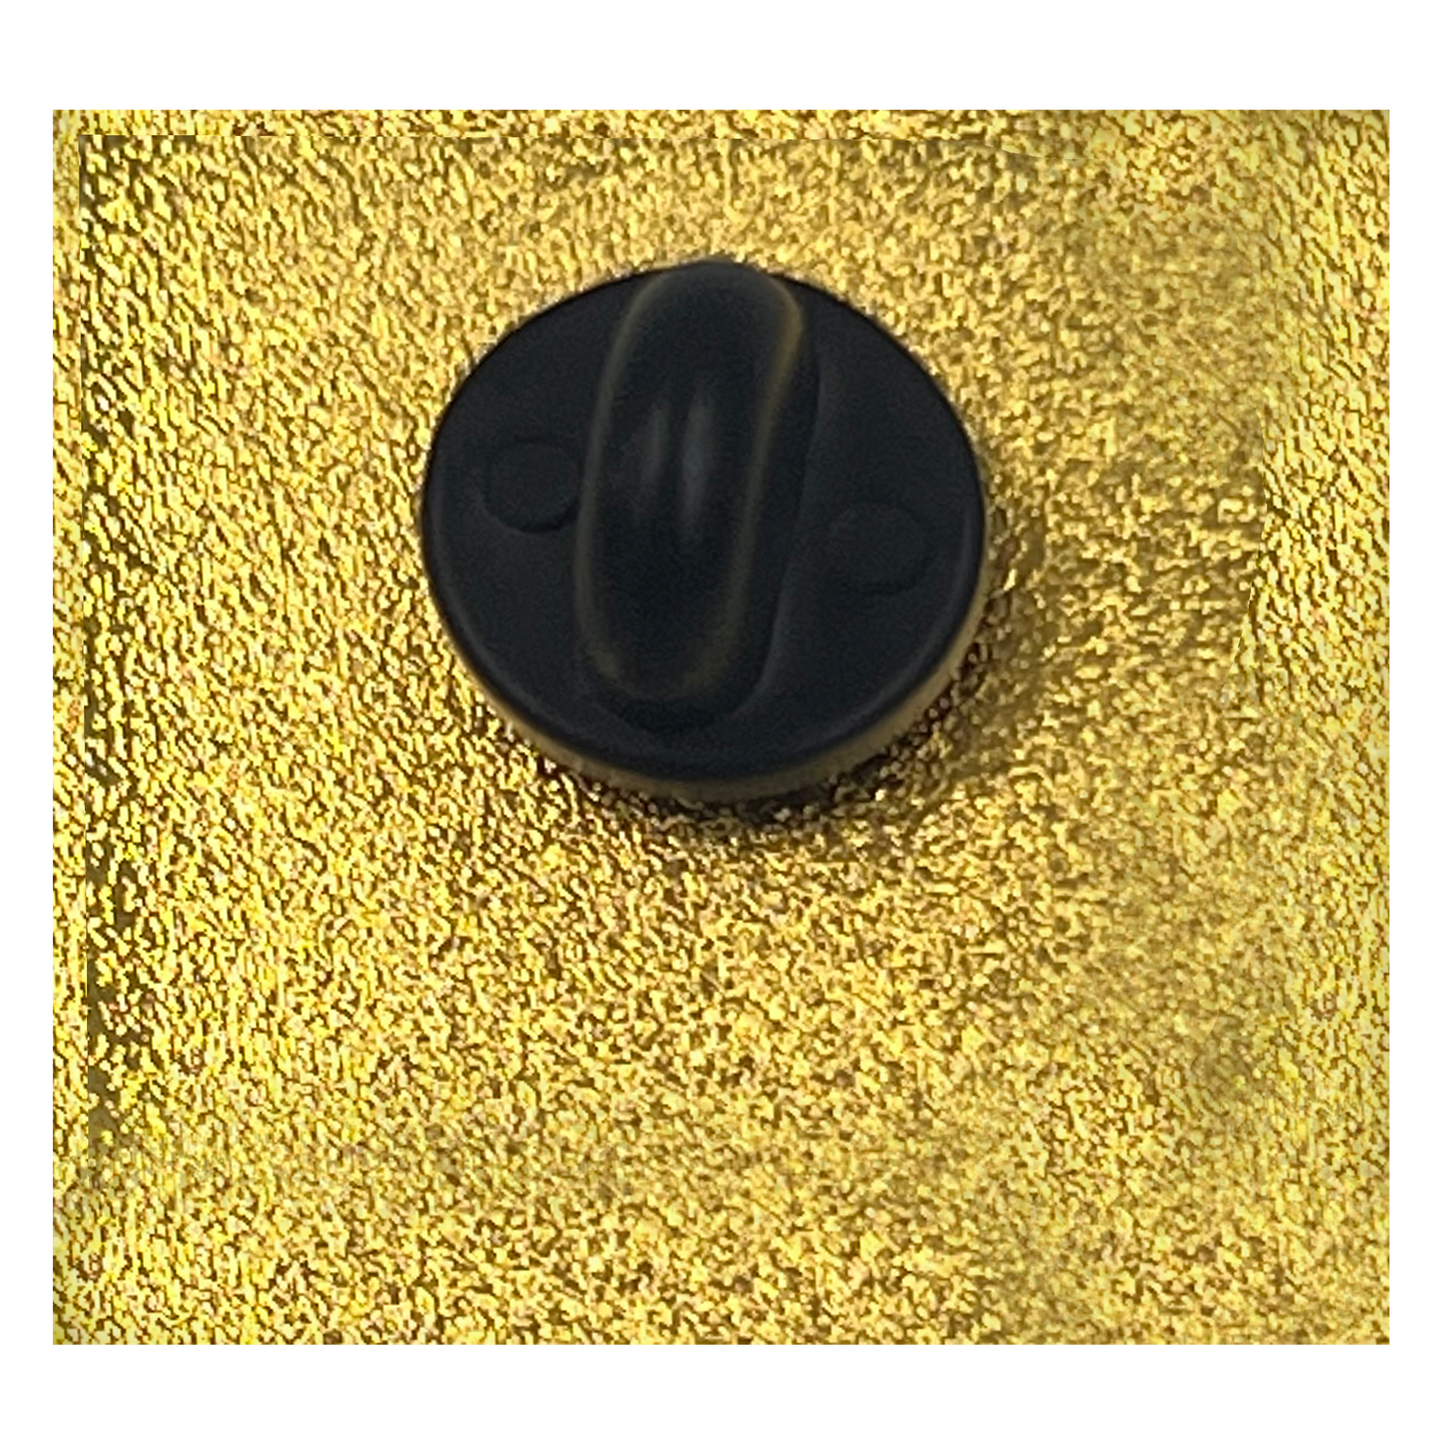 GL6-004 Home Depot Pin Associate orange apron lapel pin